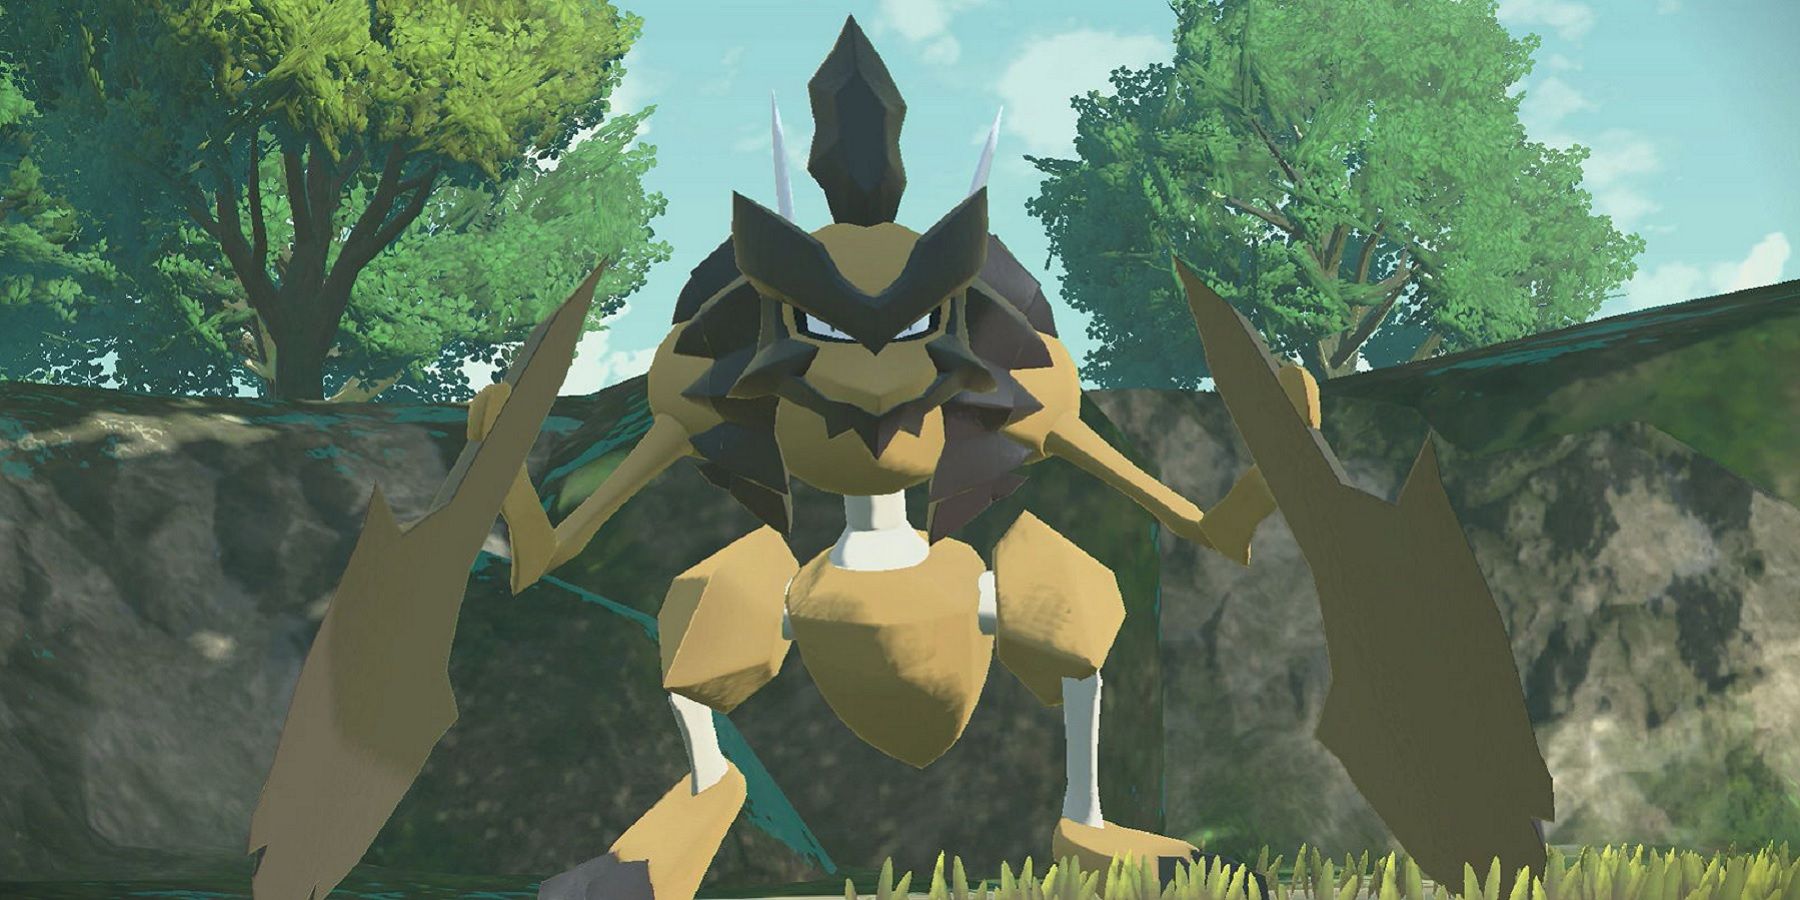 Stealth Rock animation hints Pokemon Legends Arceus gameplay changes